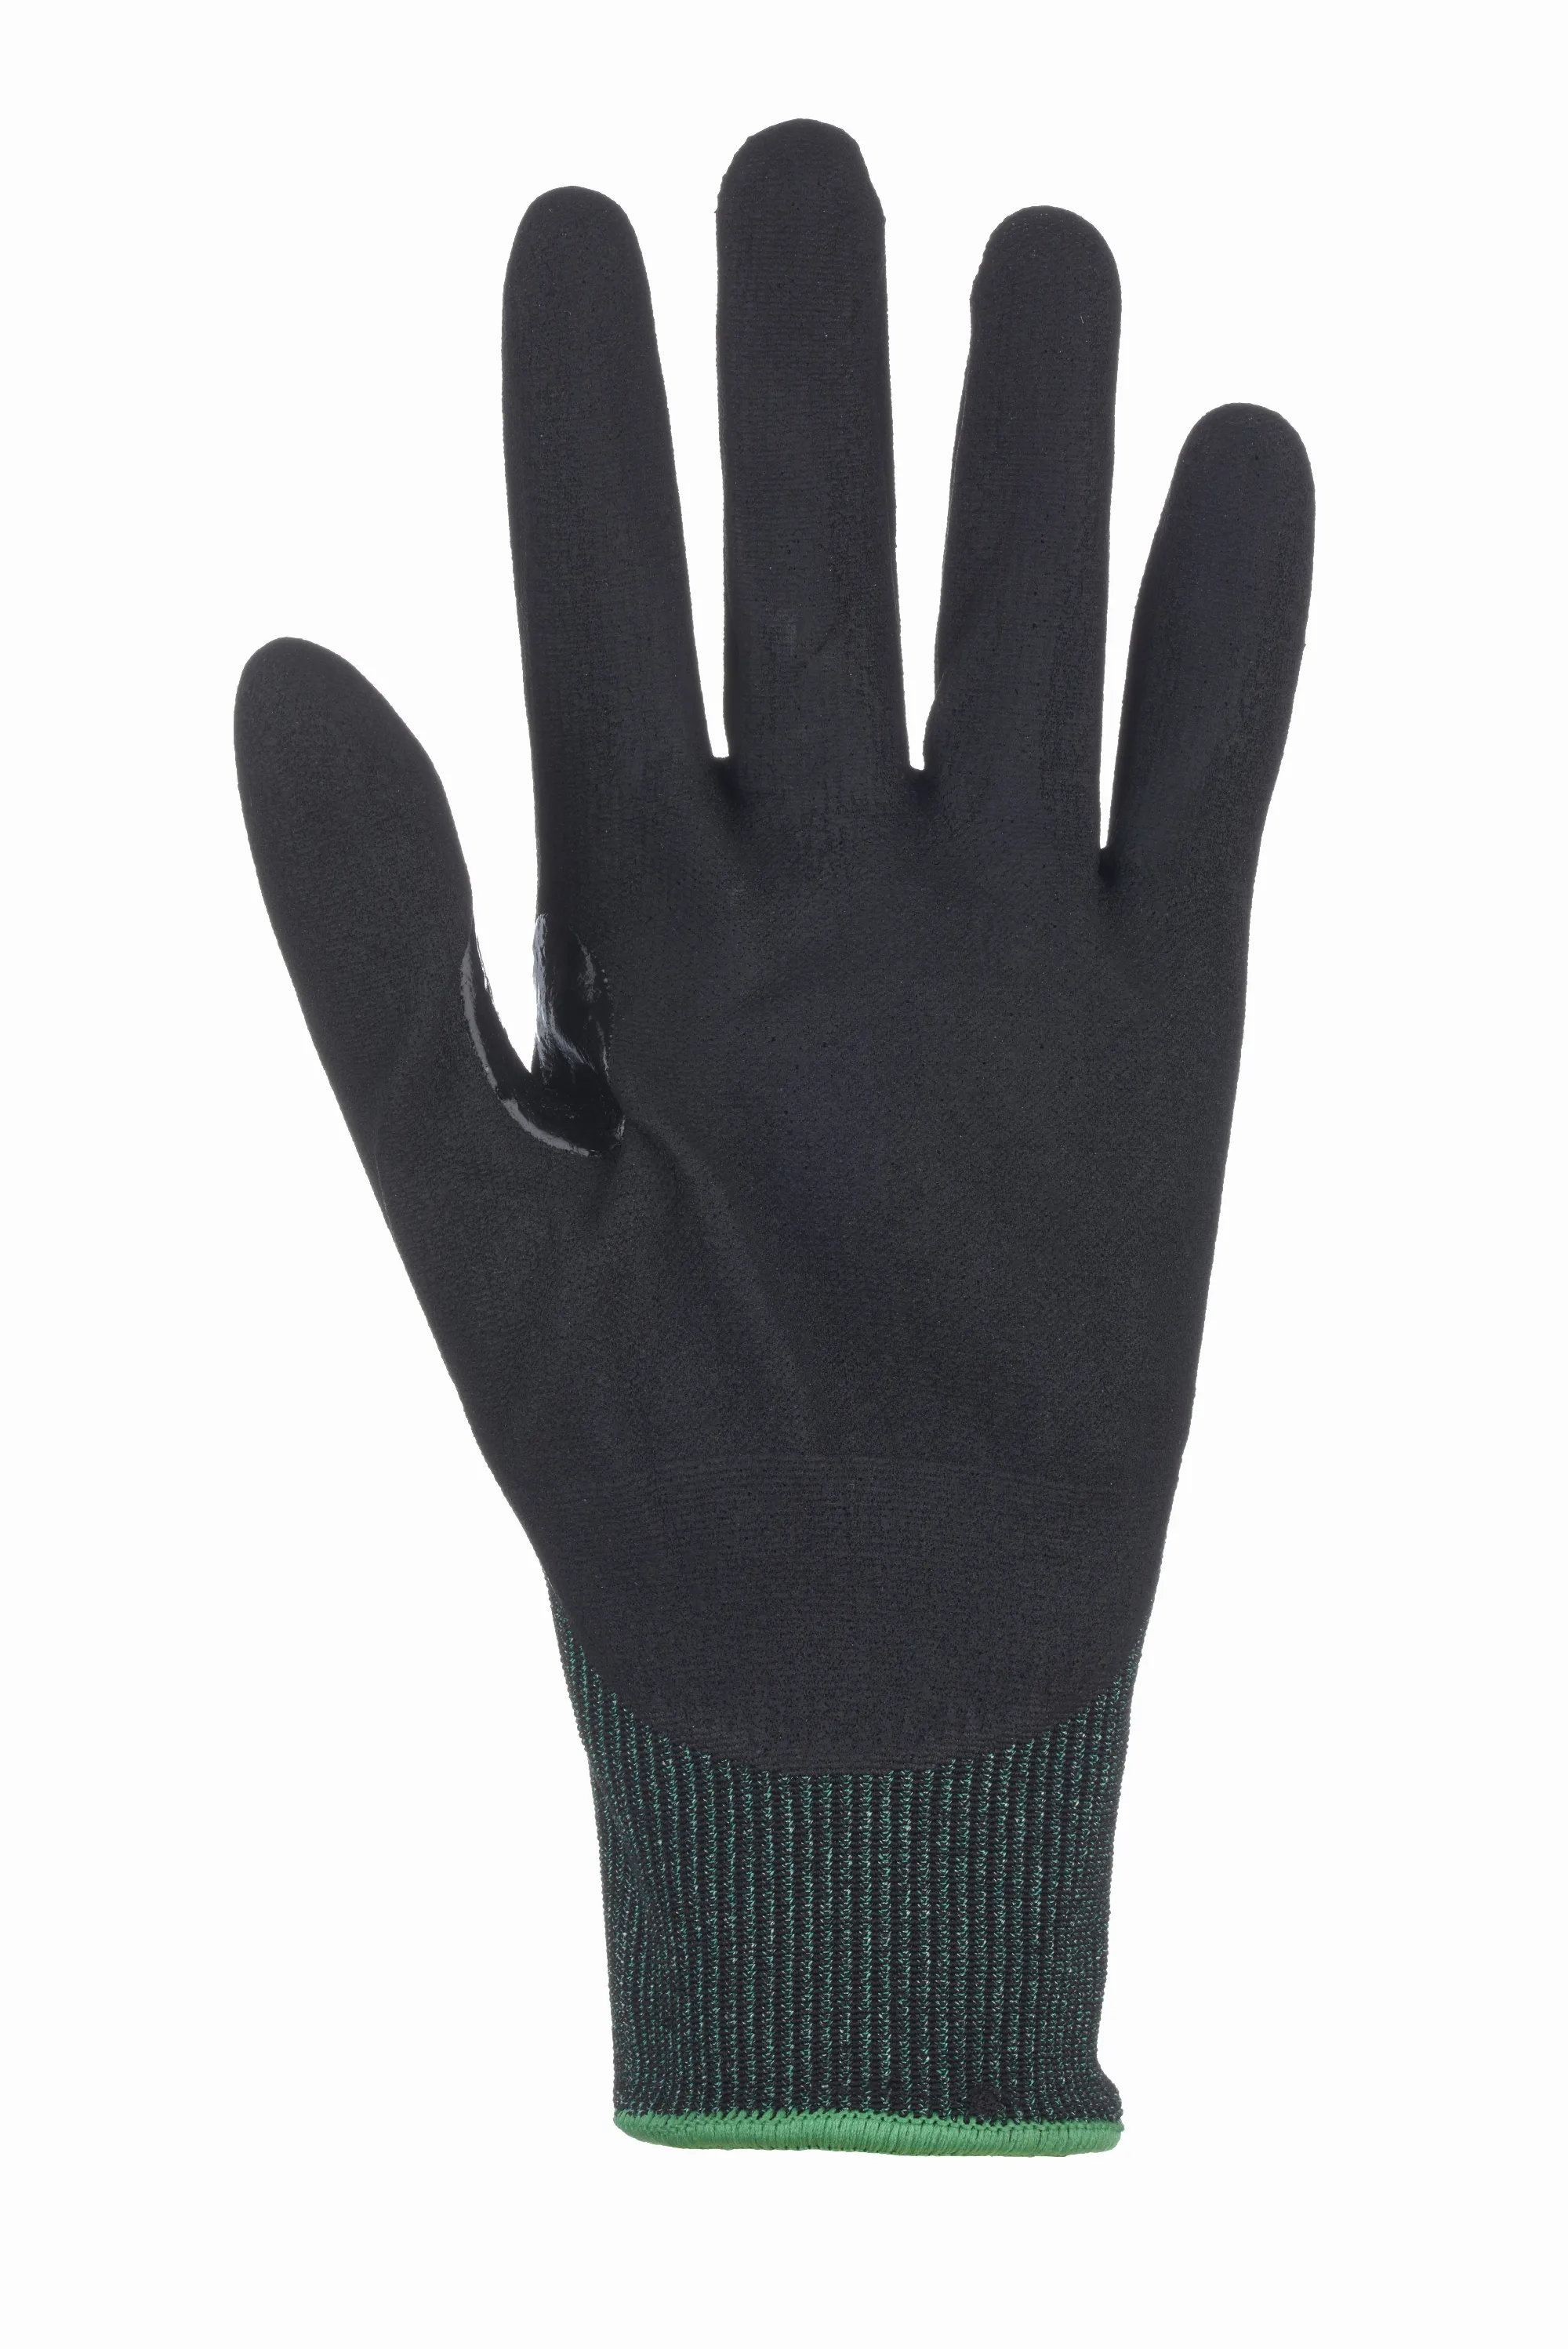 Handschuhe PORTWEST SG Cut B18 Eco (12 Paar)